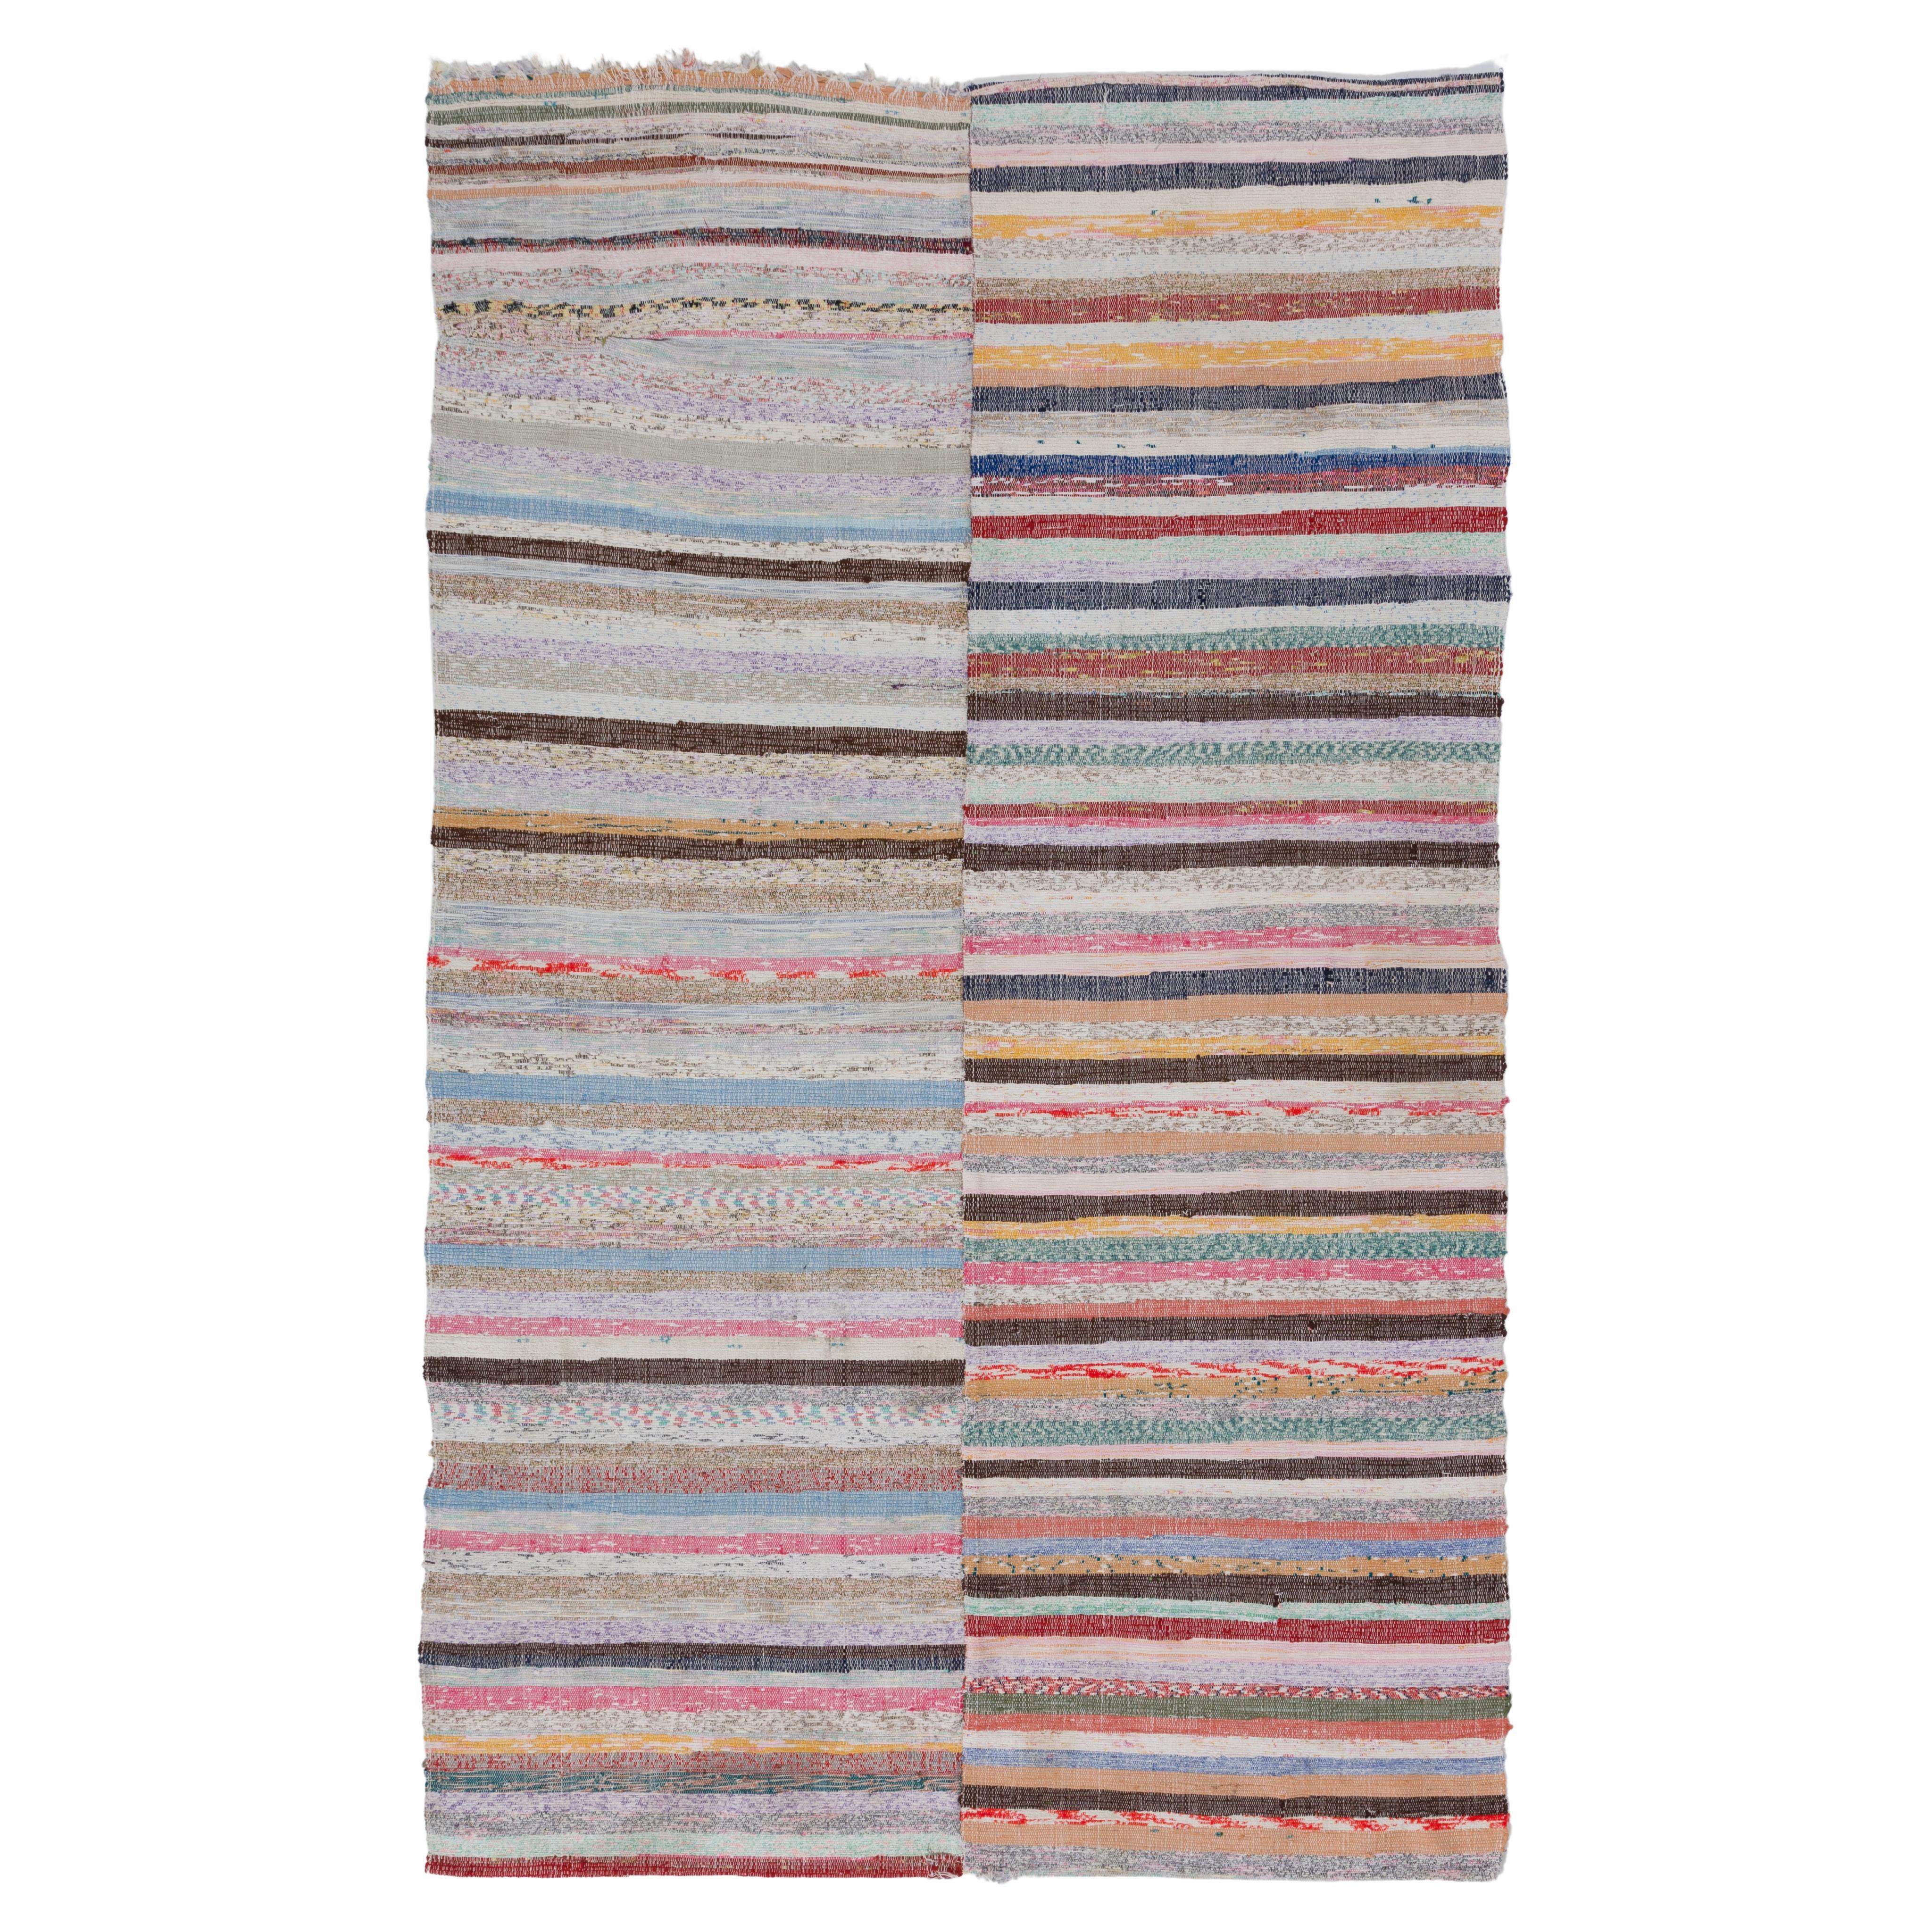 4.3x7.3 Vintage Cotton Rug Rag. Striped Flat-weave Floor Covering, Carpet. 